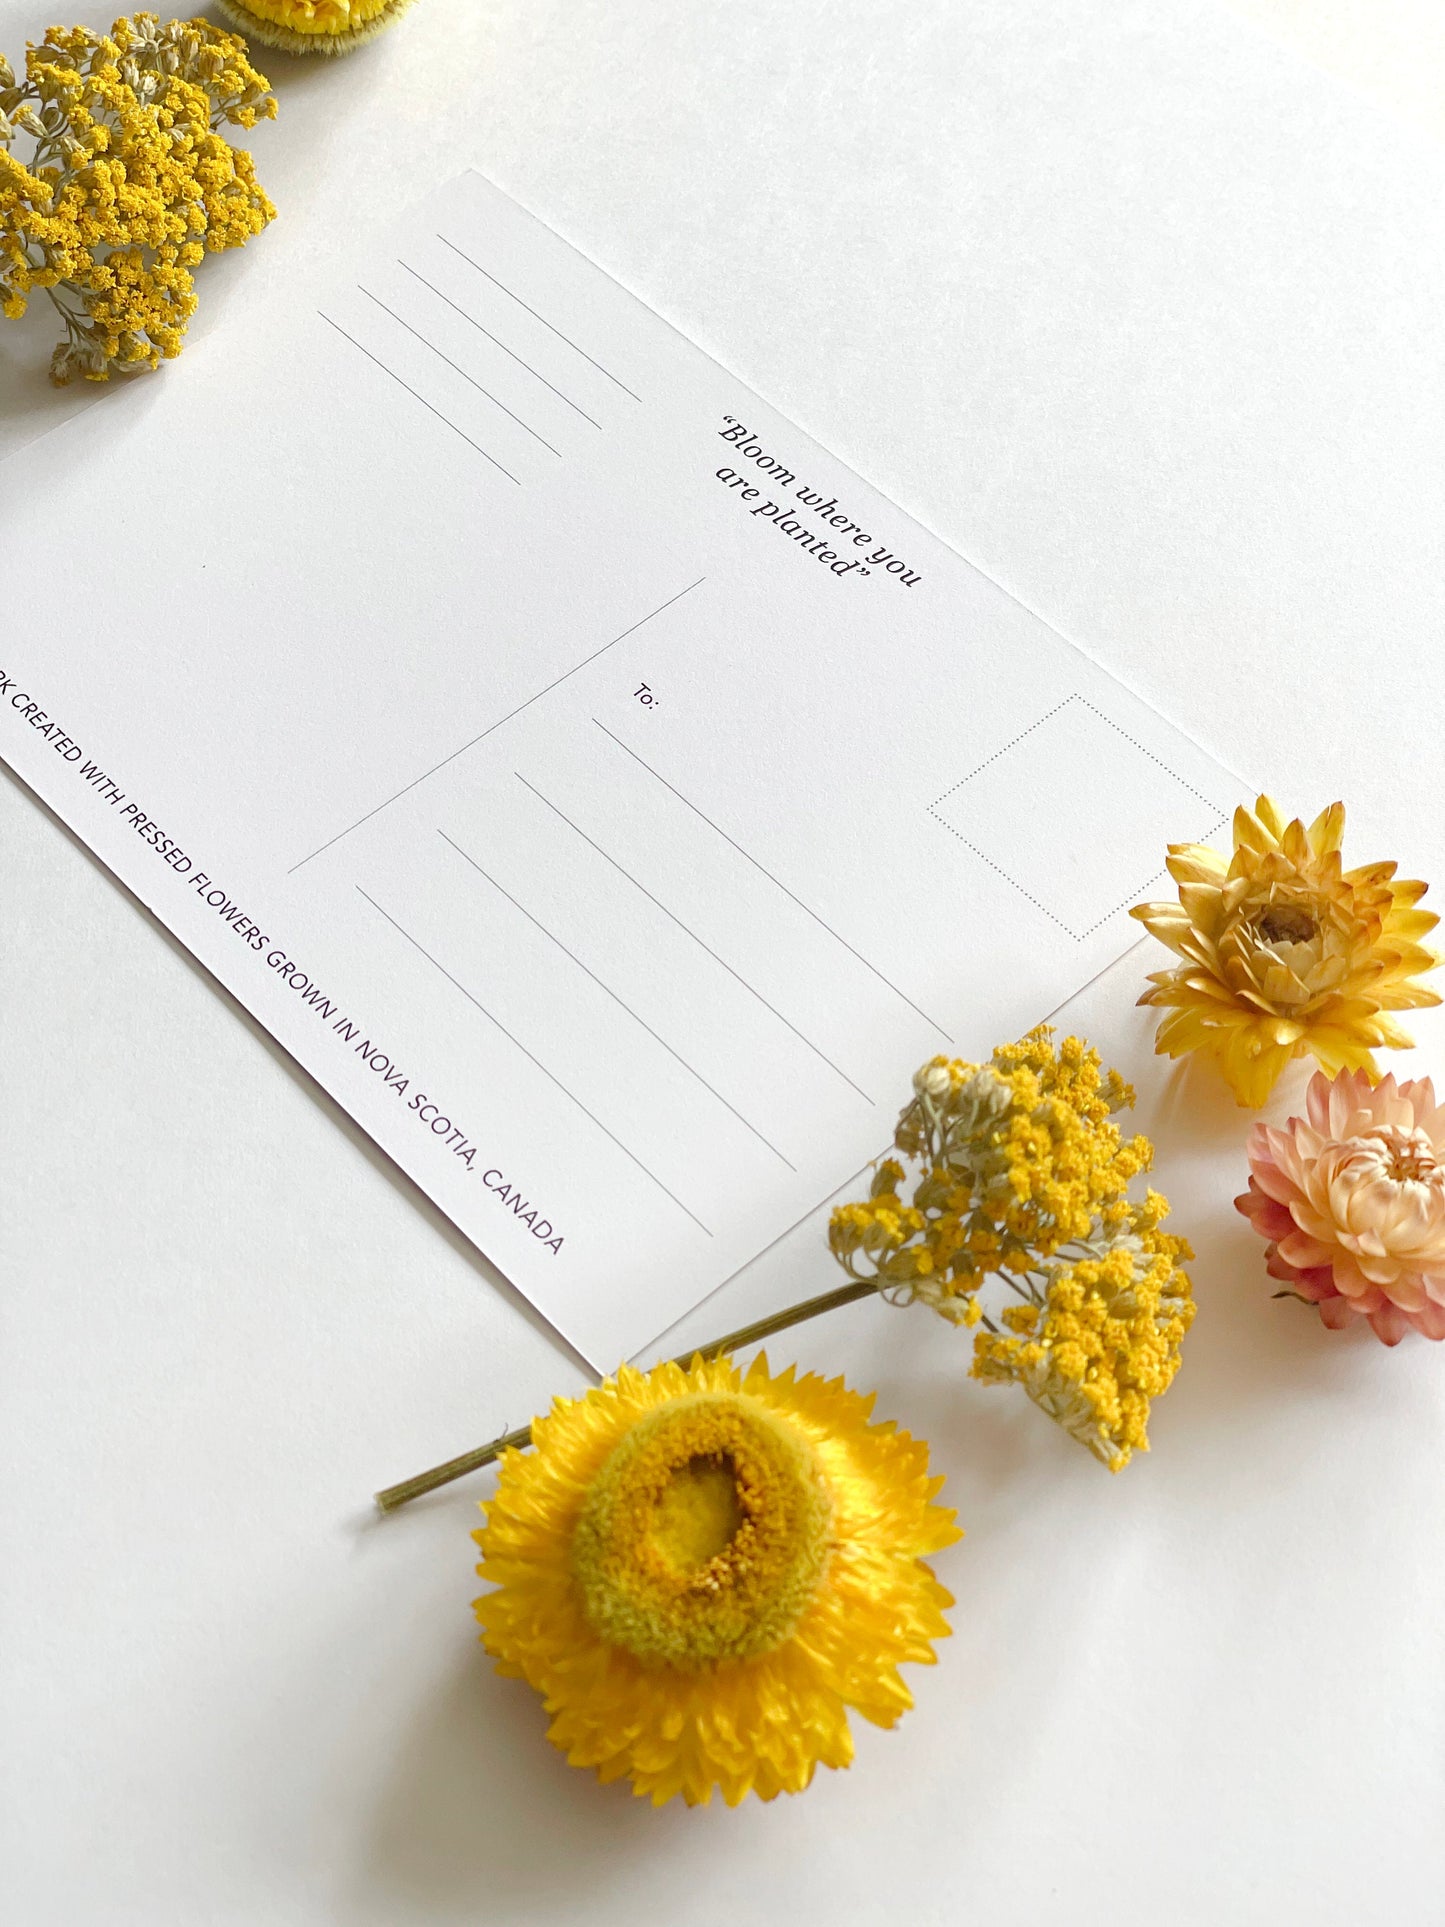 Post Cards - Set of 3 Nova Scotia Theme Pressed Flower Art Postcards